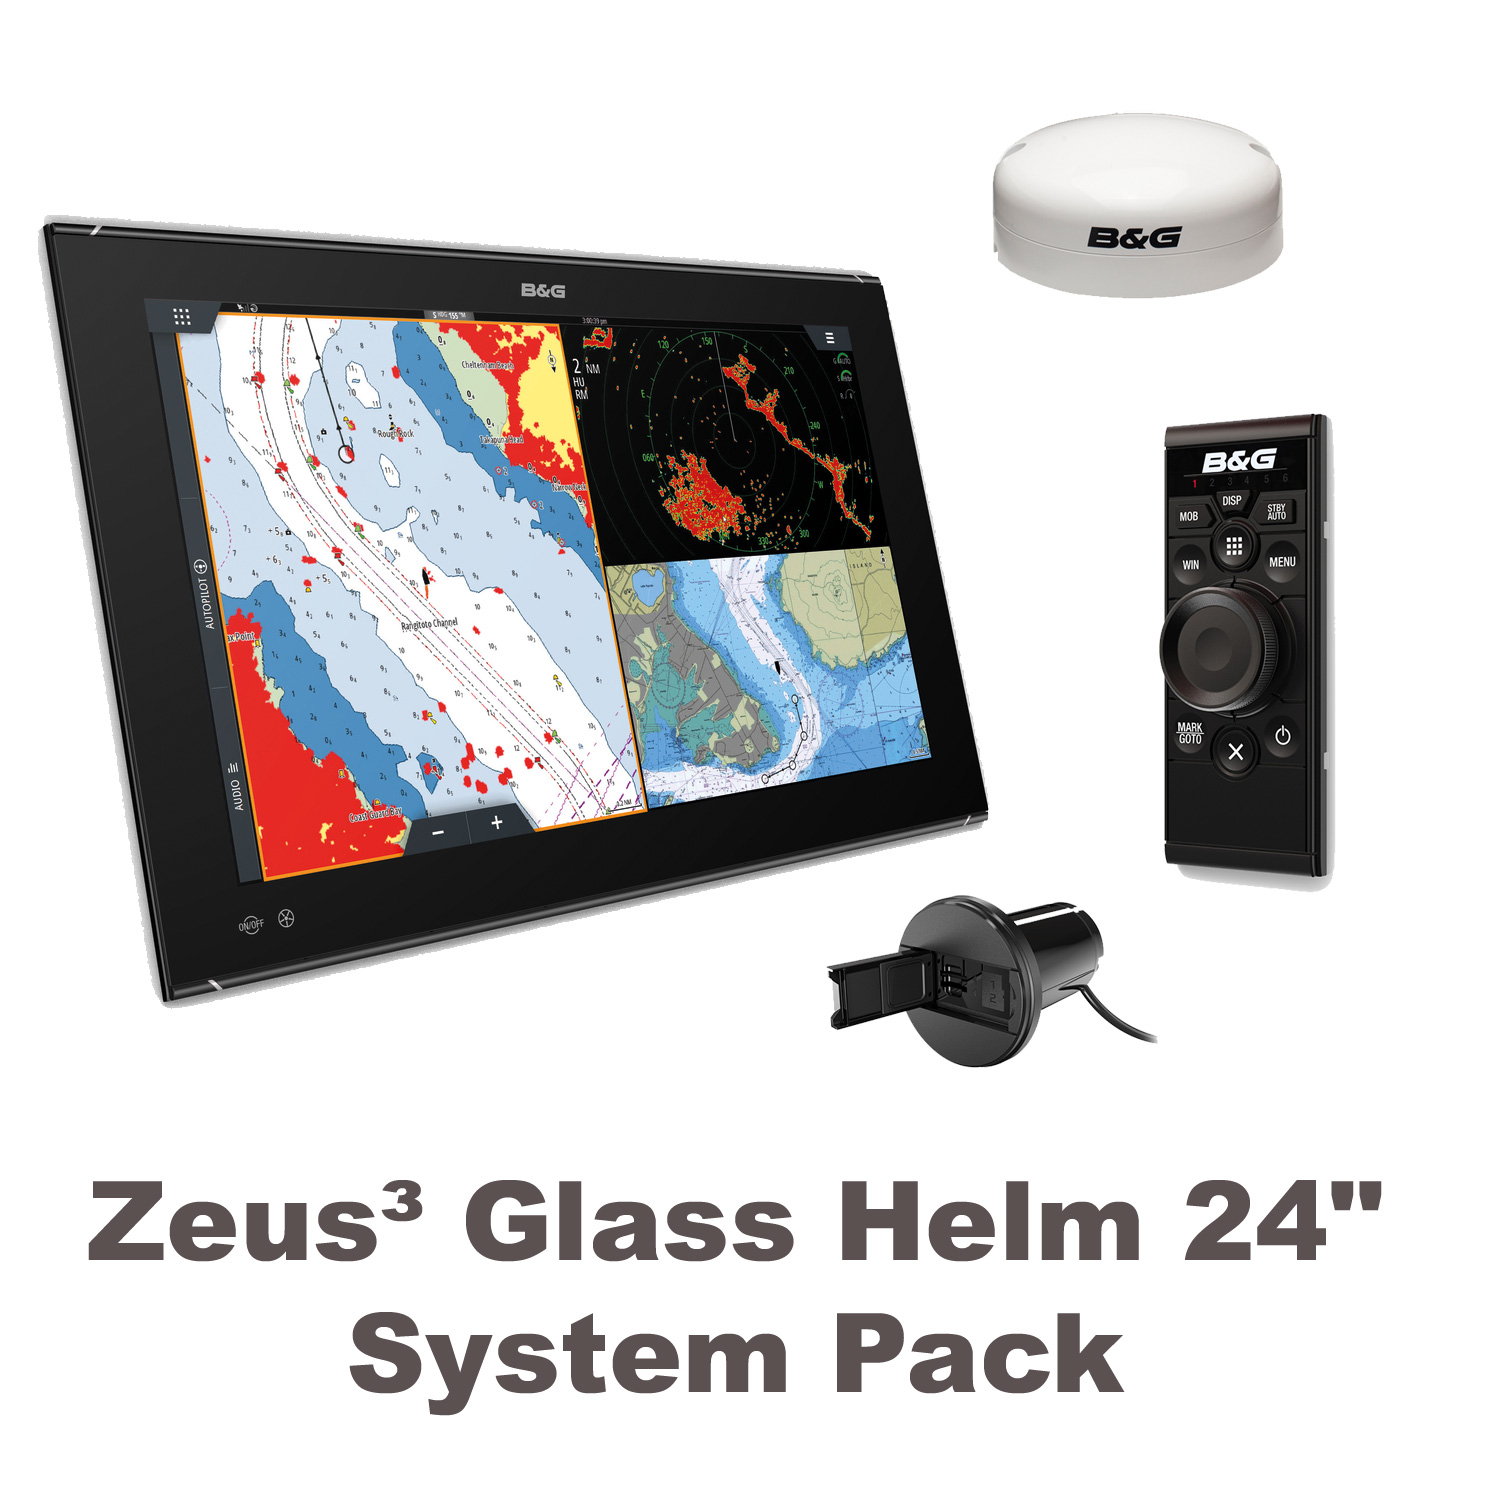 B&G Zeus3 Glass Helm 24" System Paket